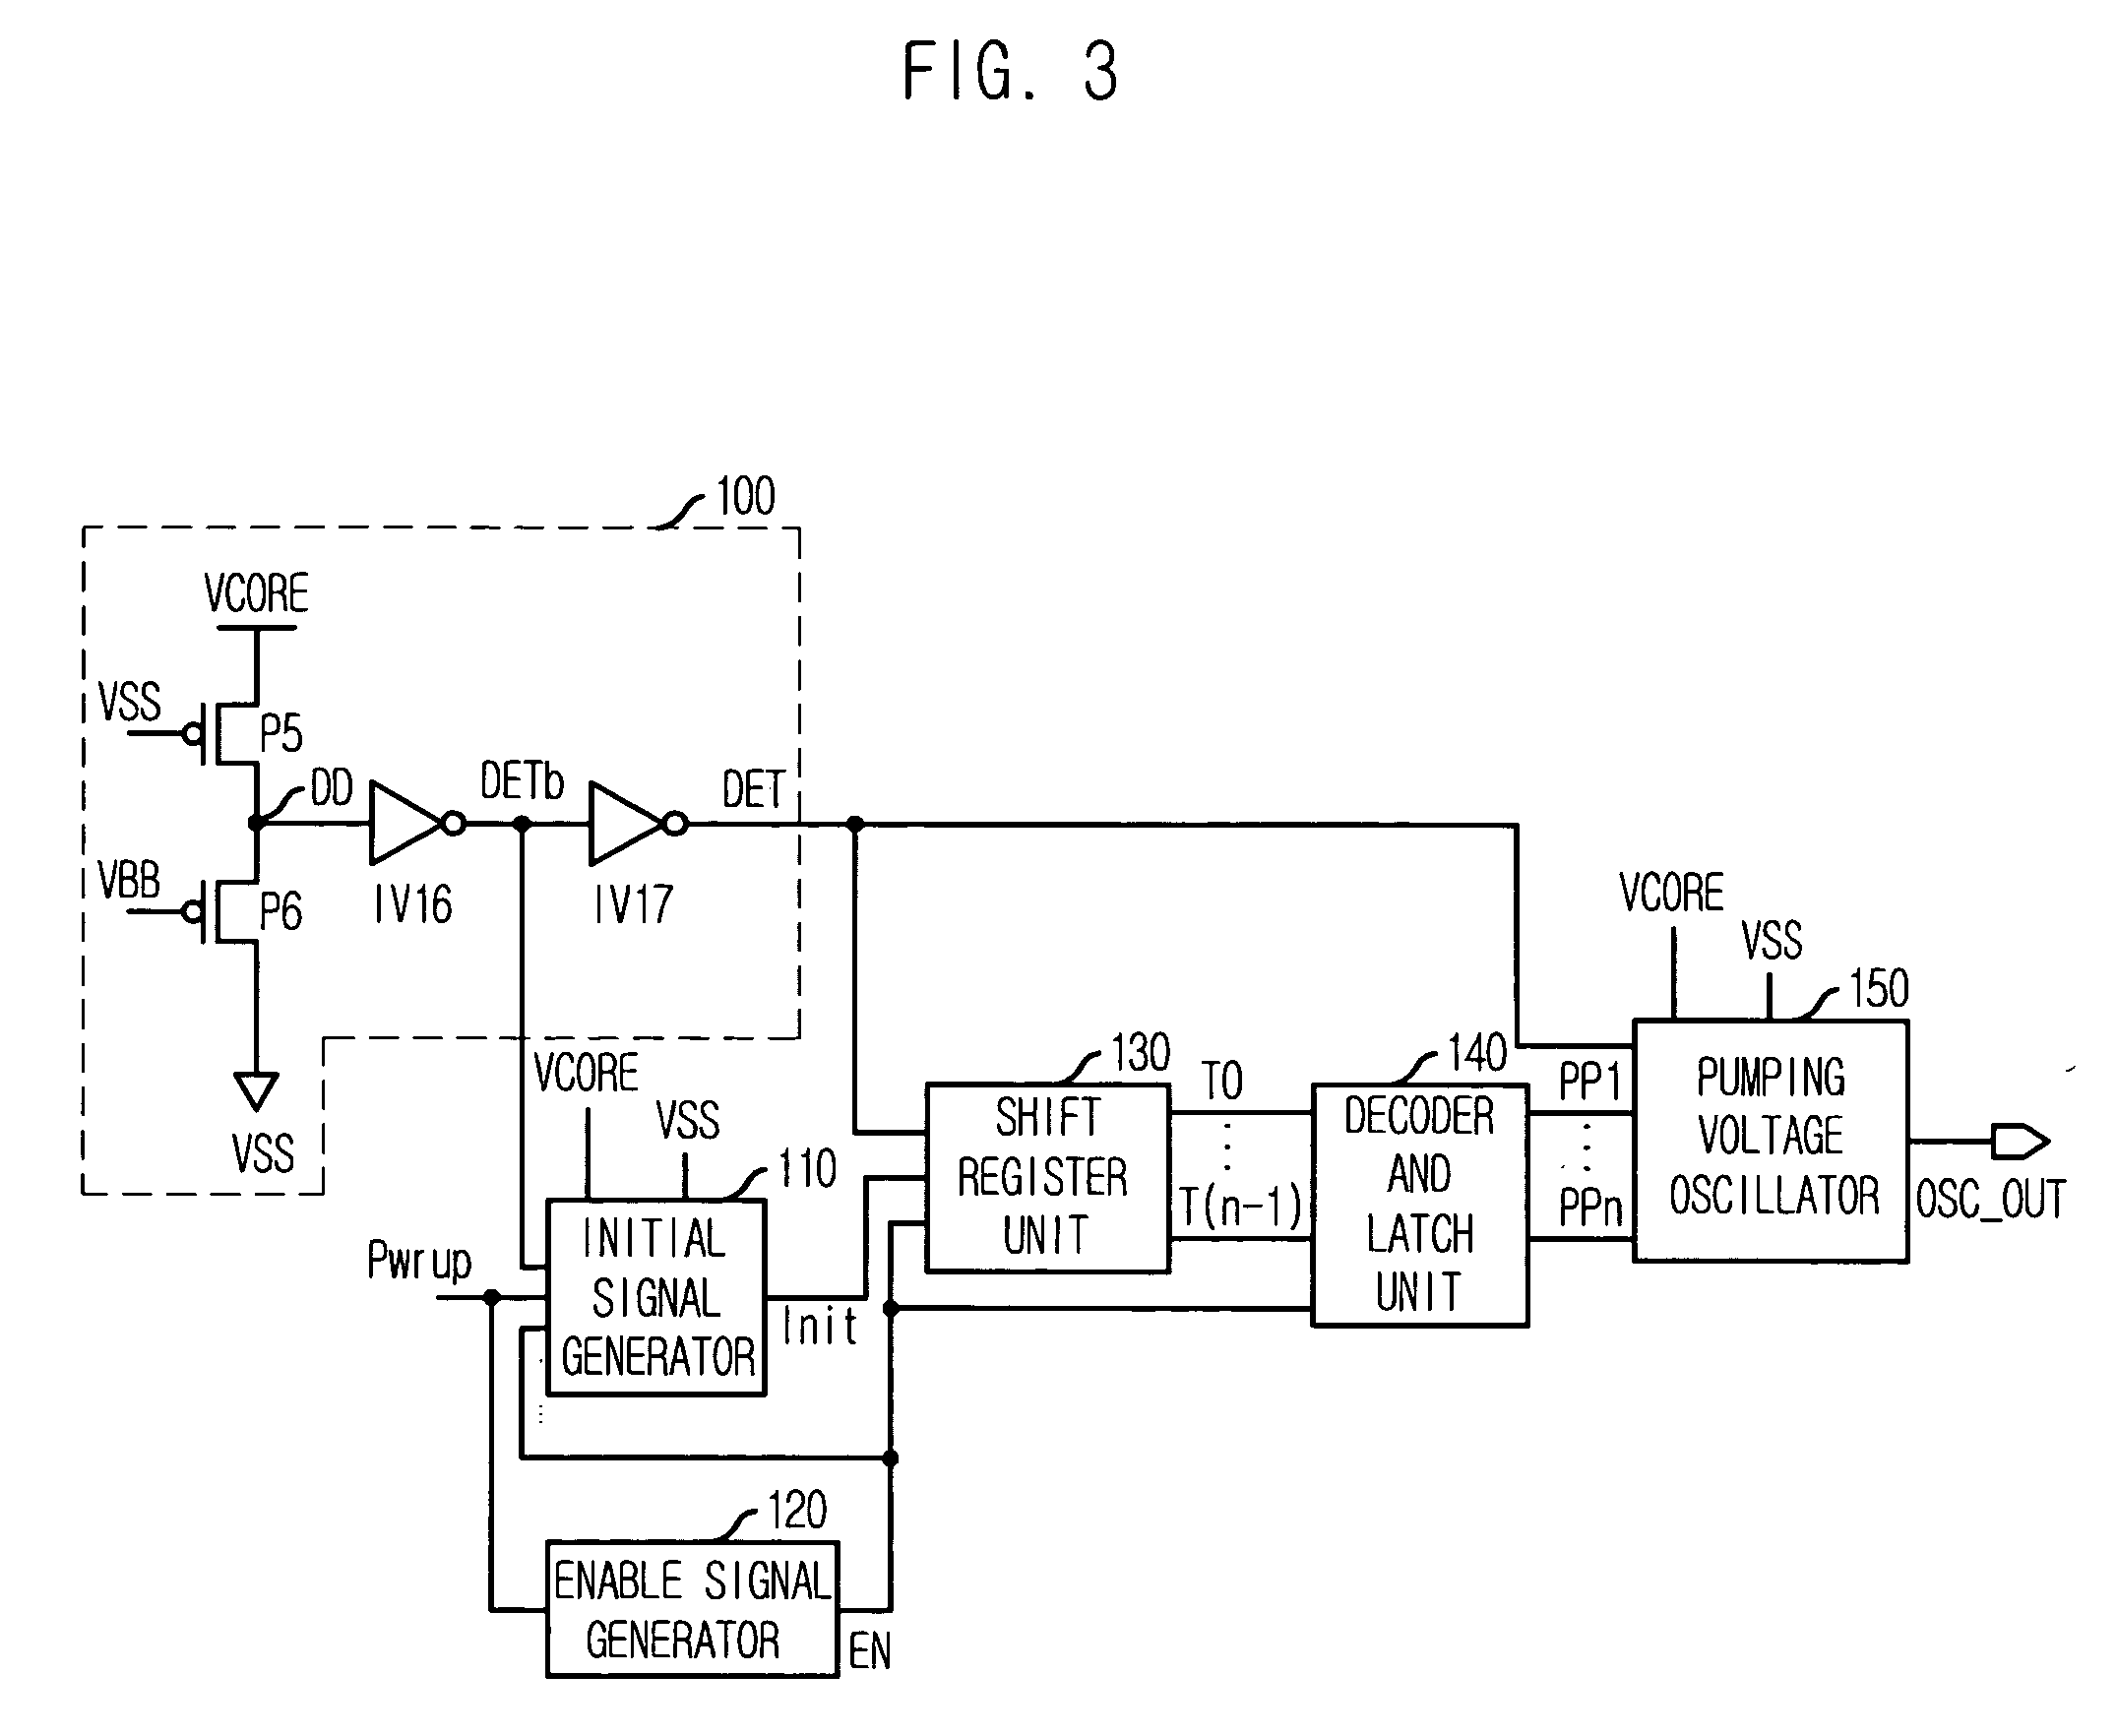 Internal voltage generating circuit